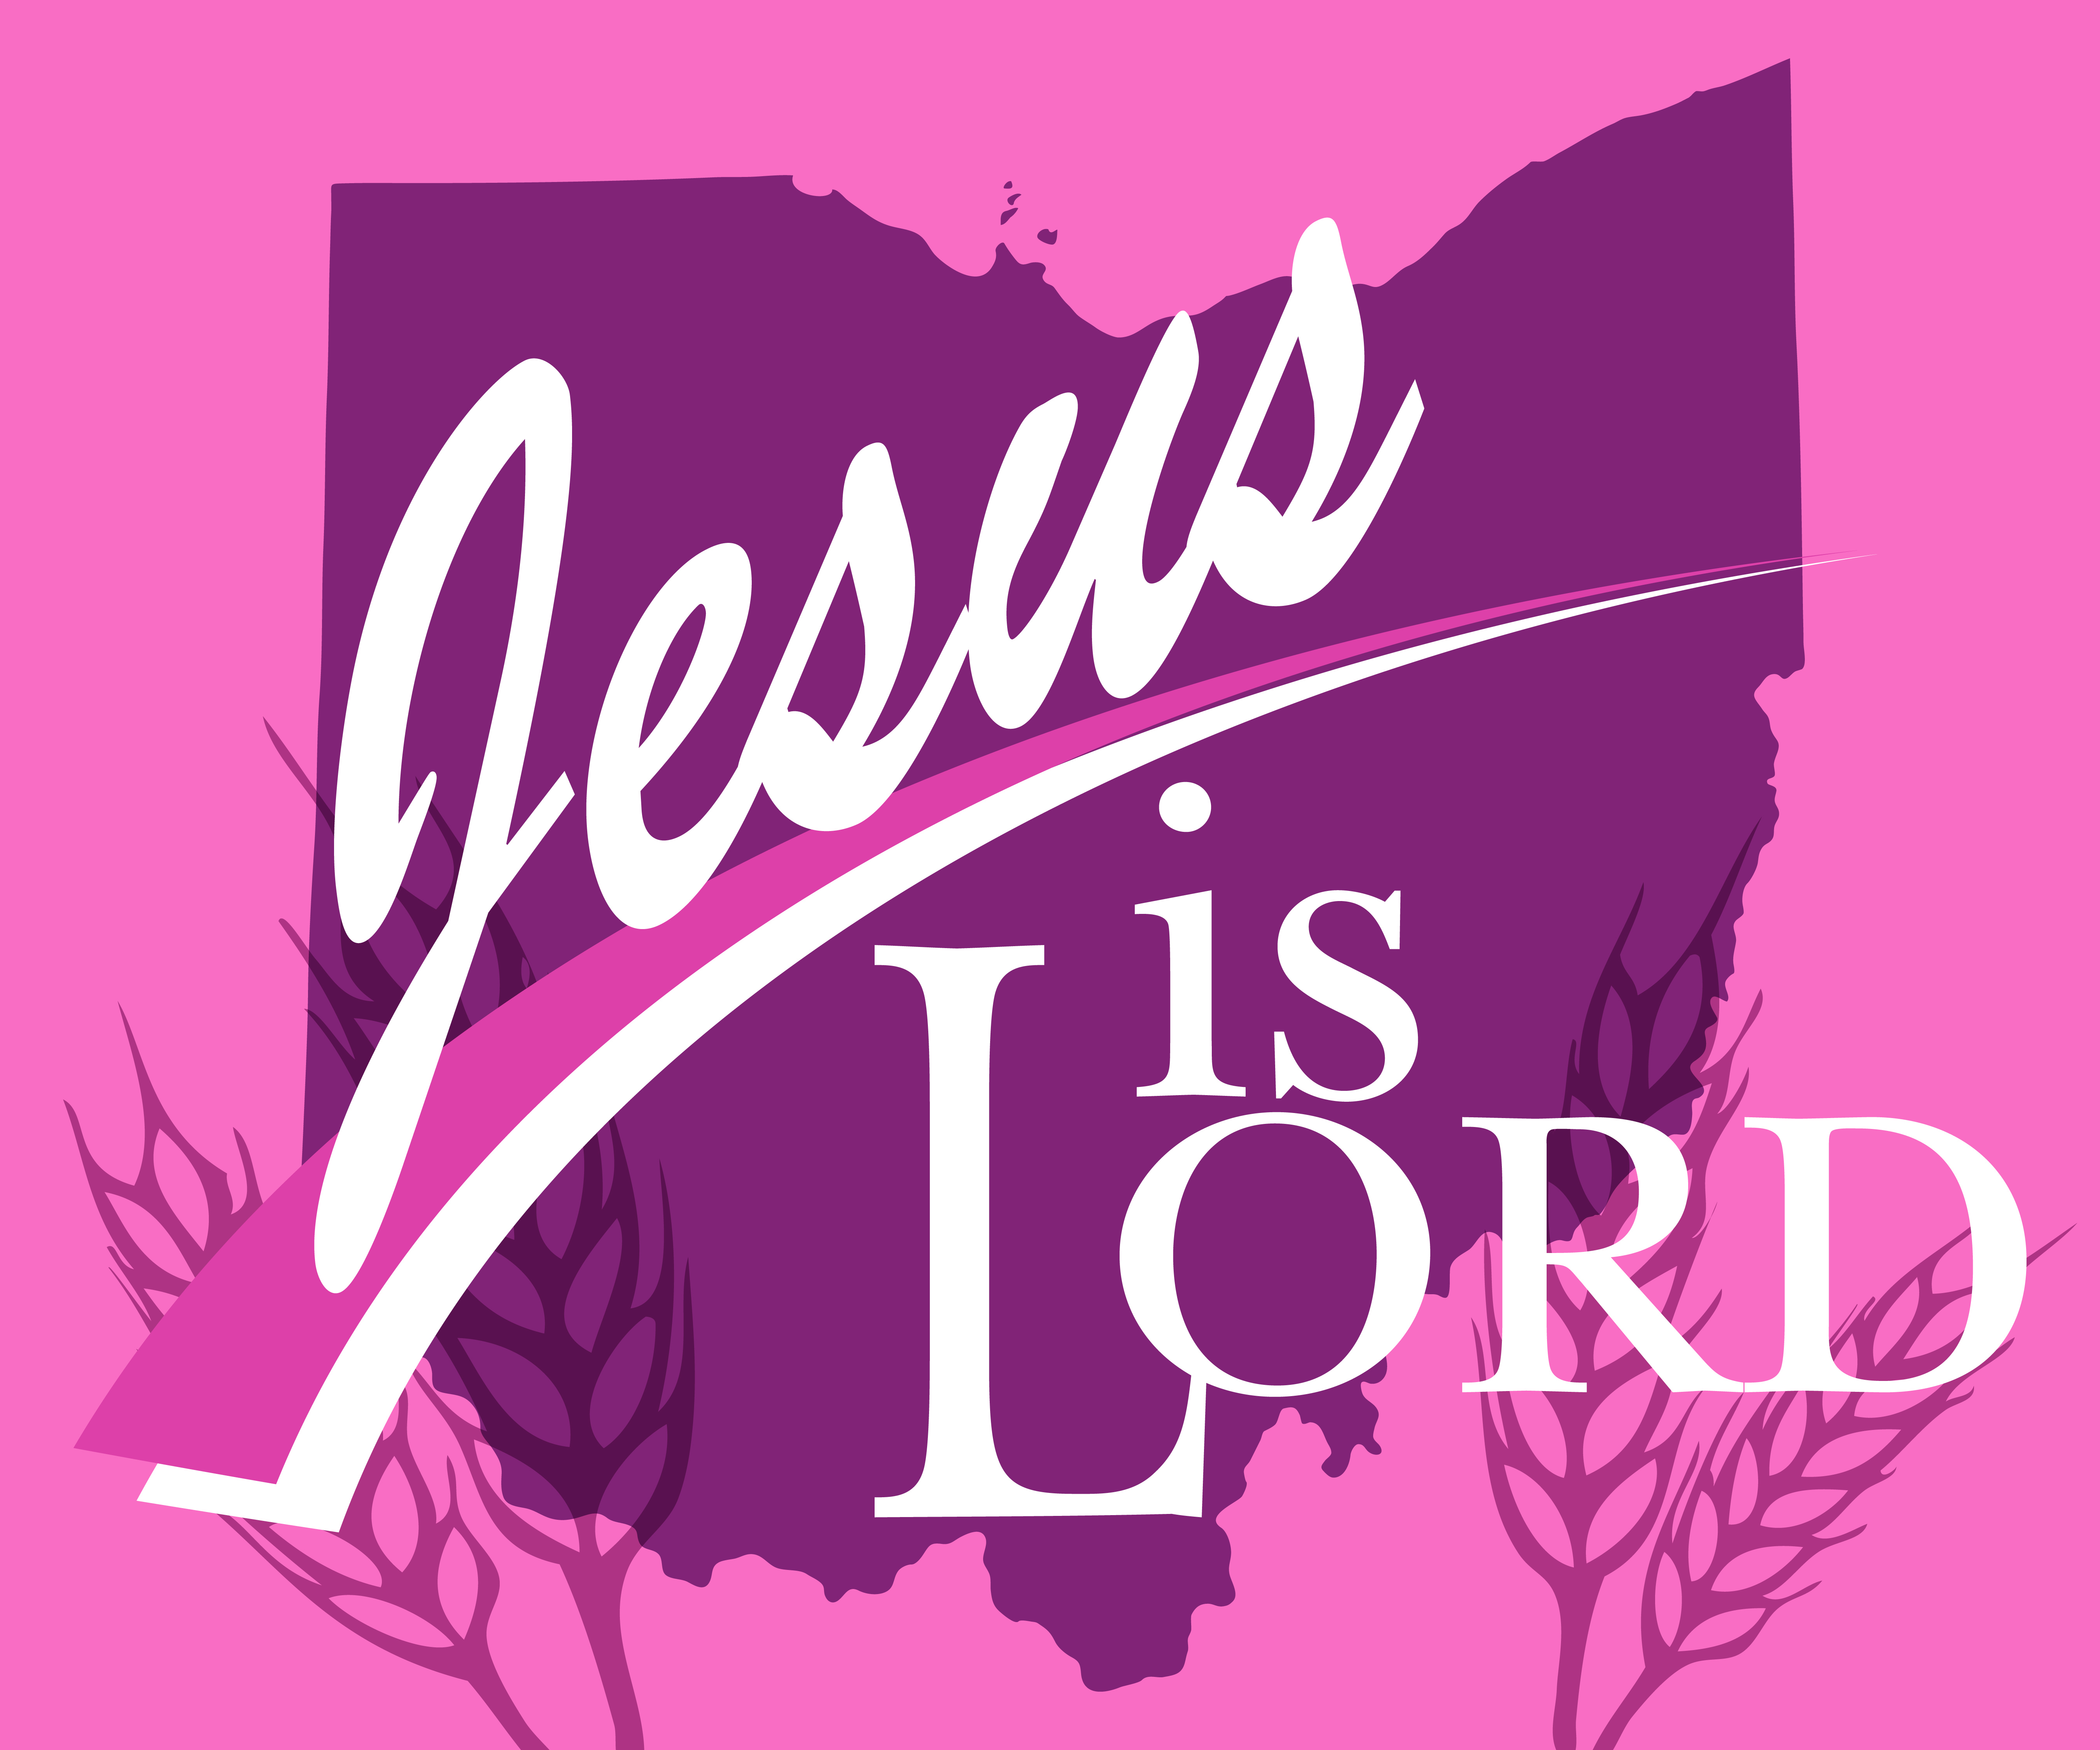 Jesus is Lord over Ohio!